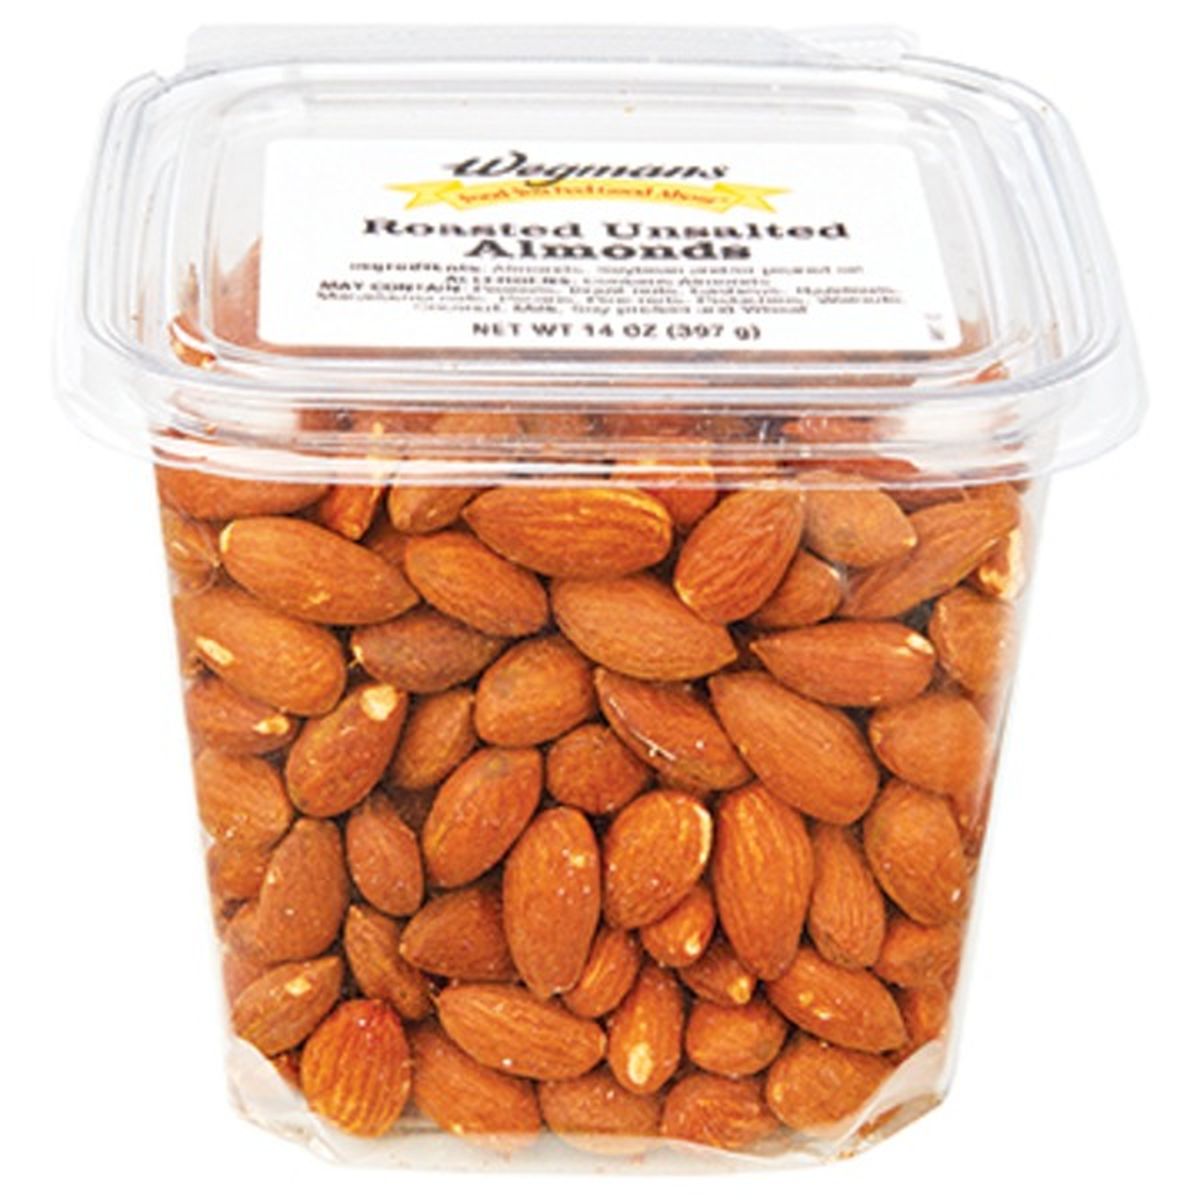 Calories in Wegmans Roasted Unsalted Almonds